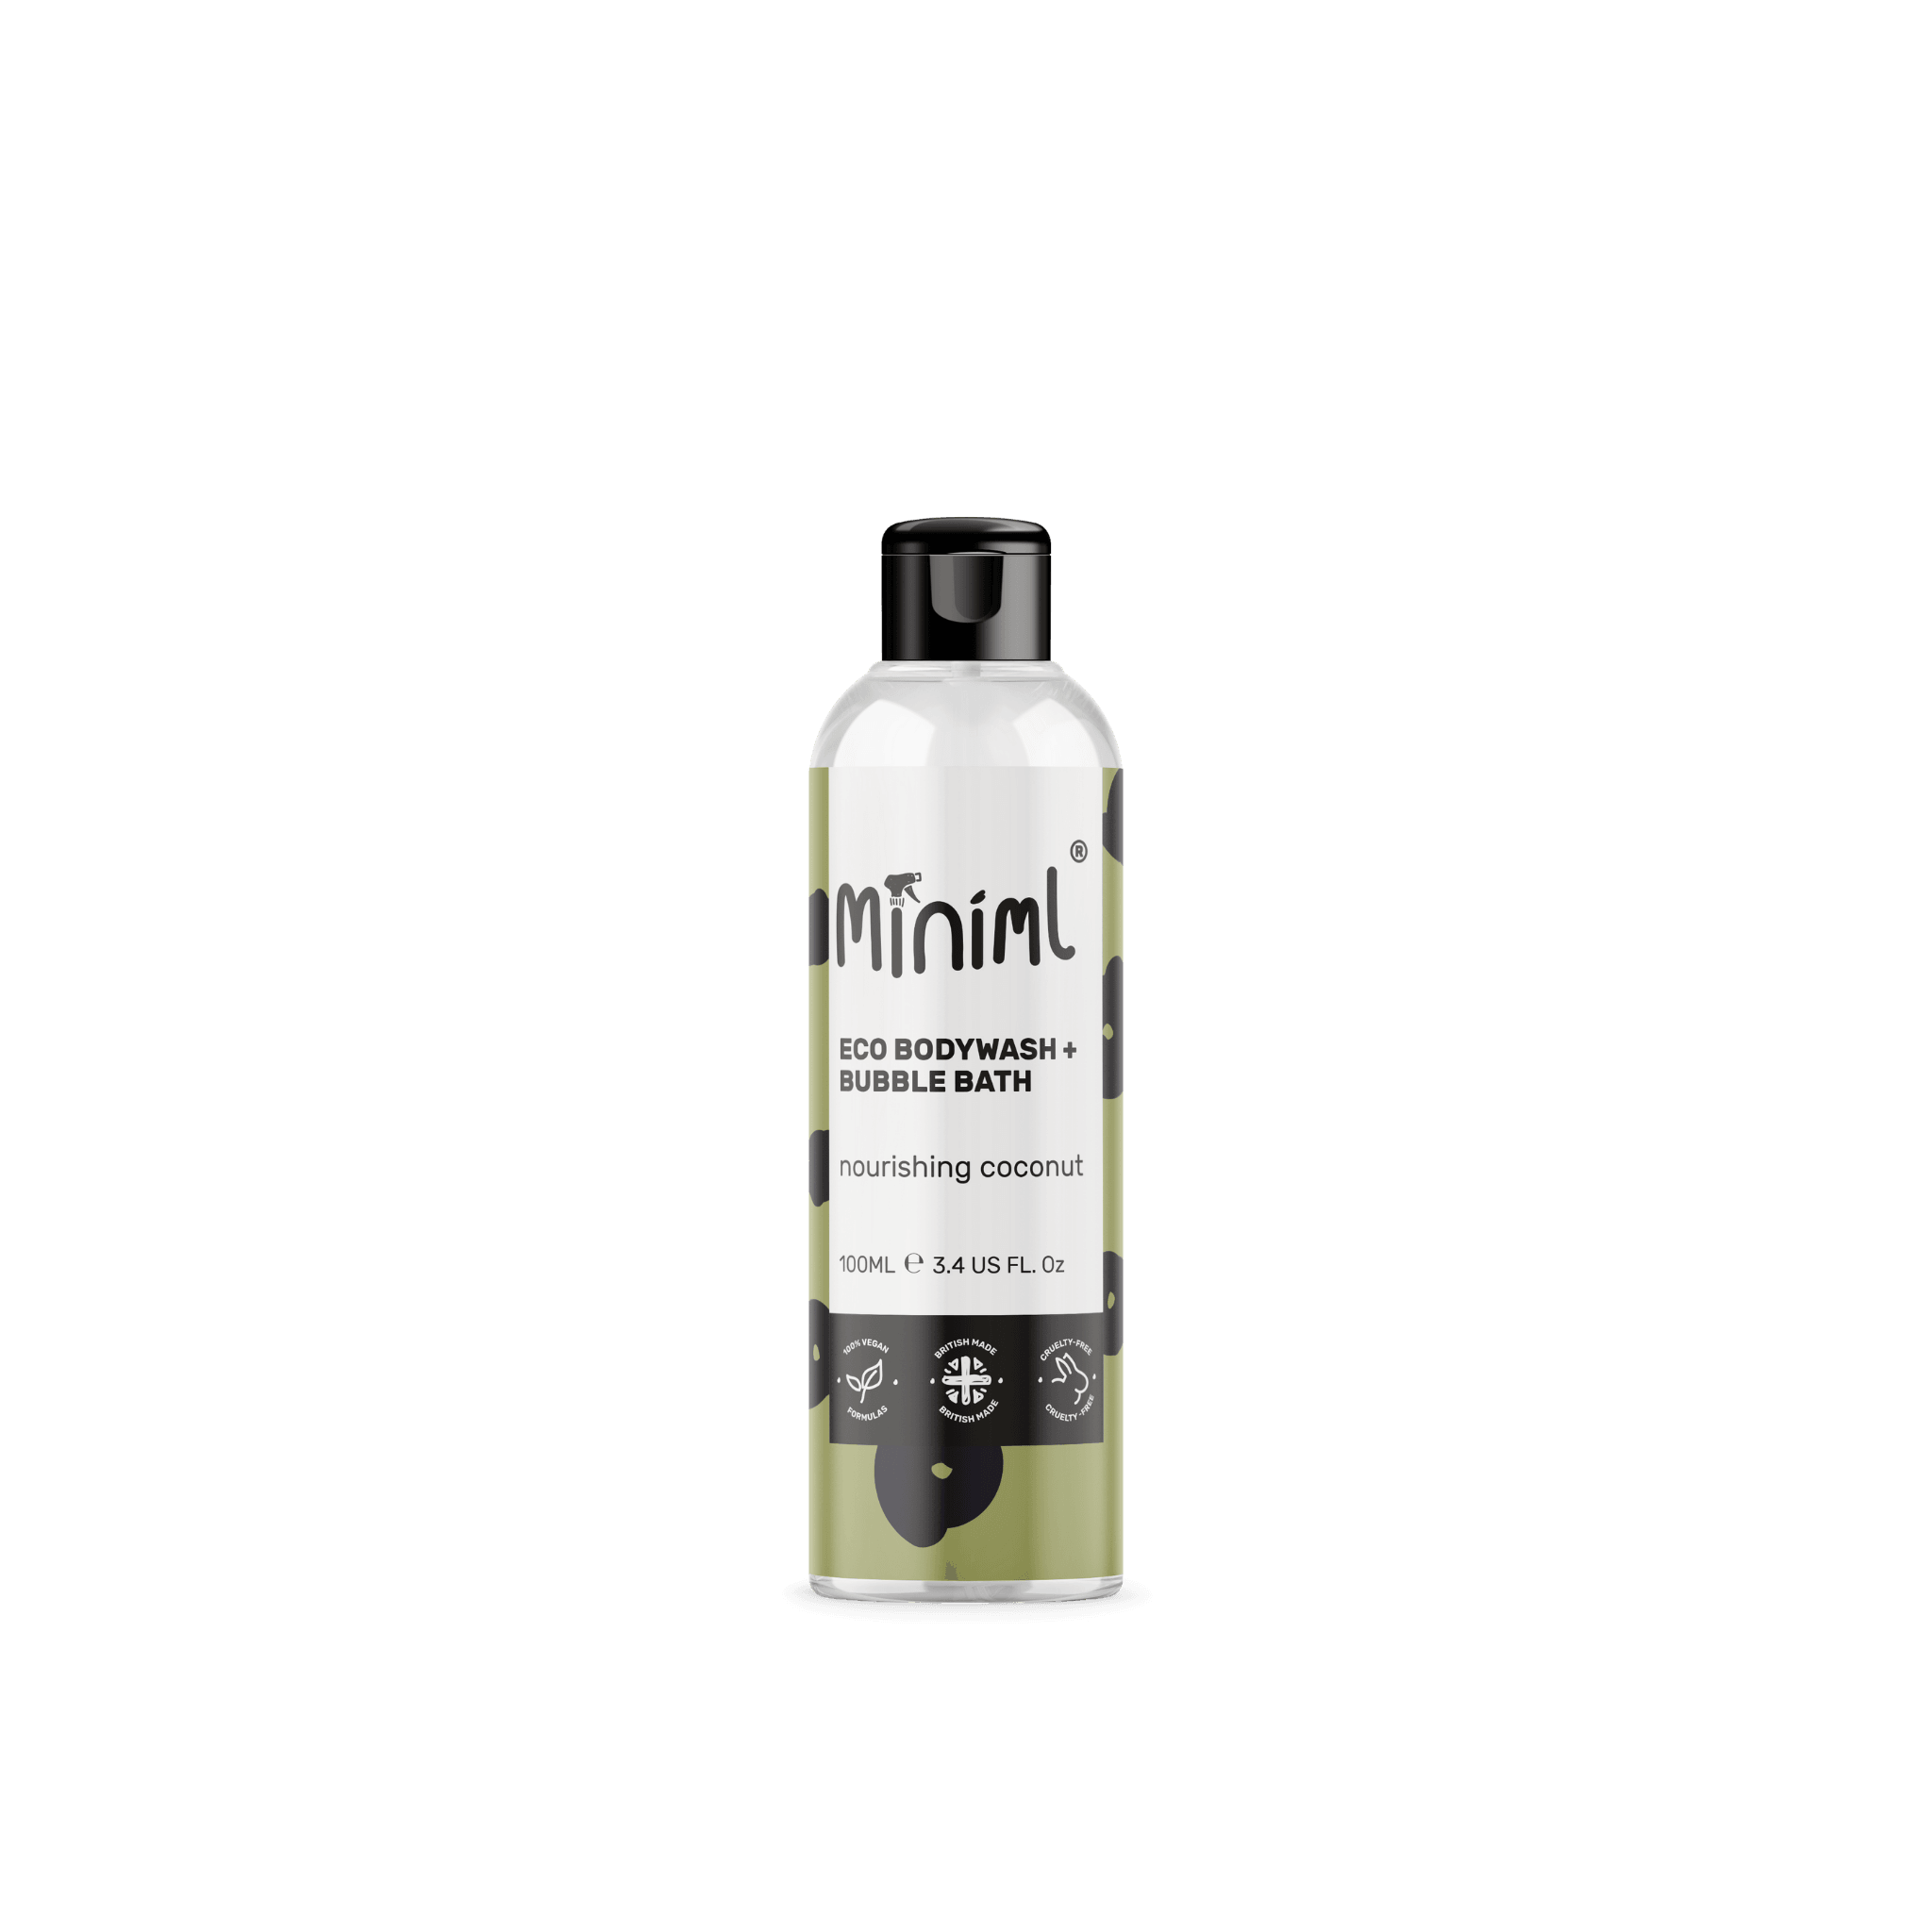 Miniml - Eco Friendly - Body Wash + Bubblebath - Nourishing Coconut - 100ml - Vending Superstore